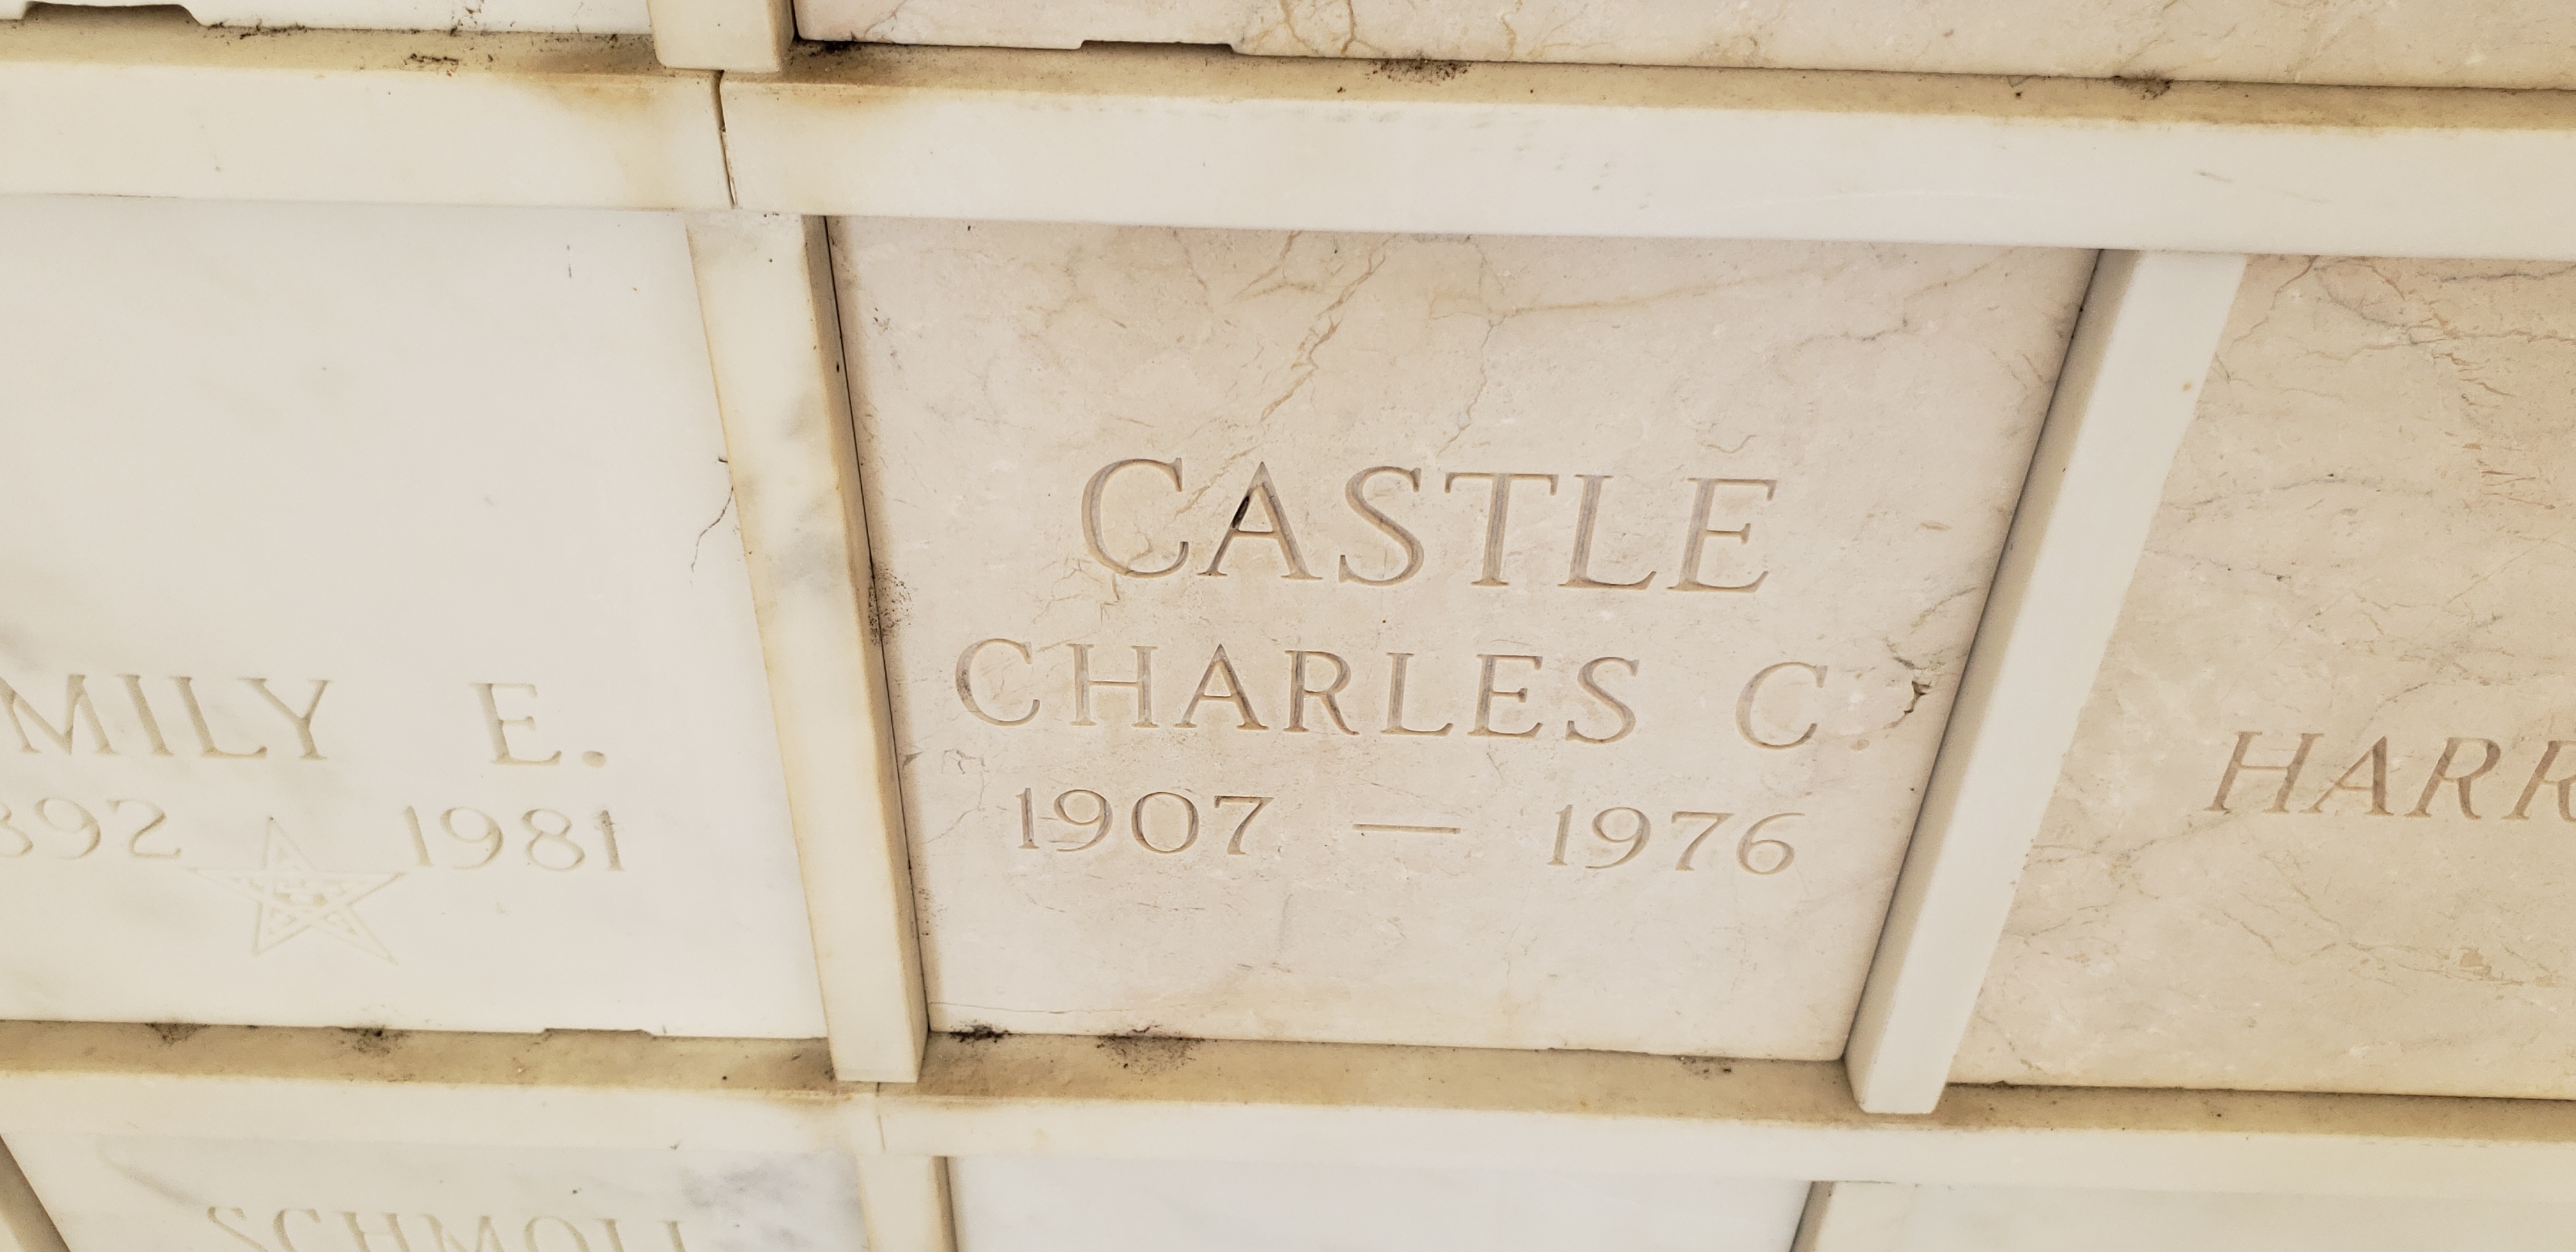 Charles C Castle